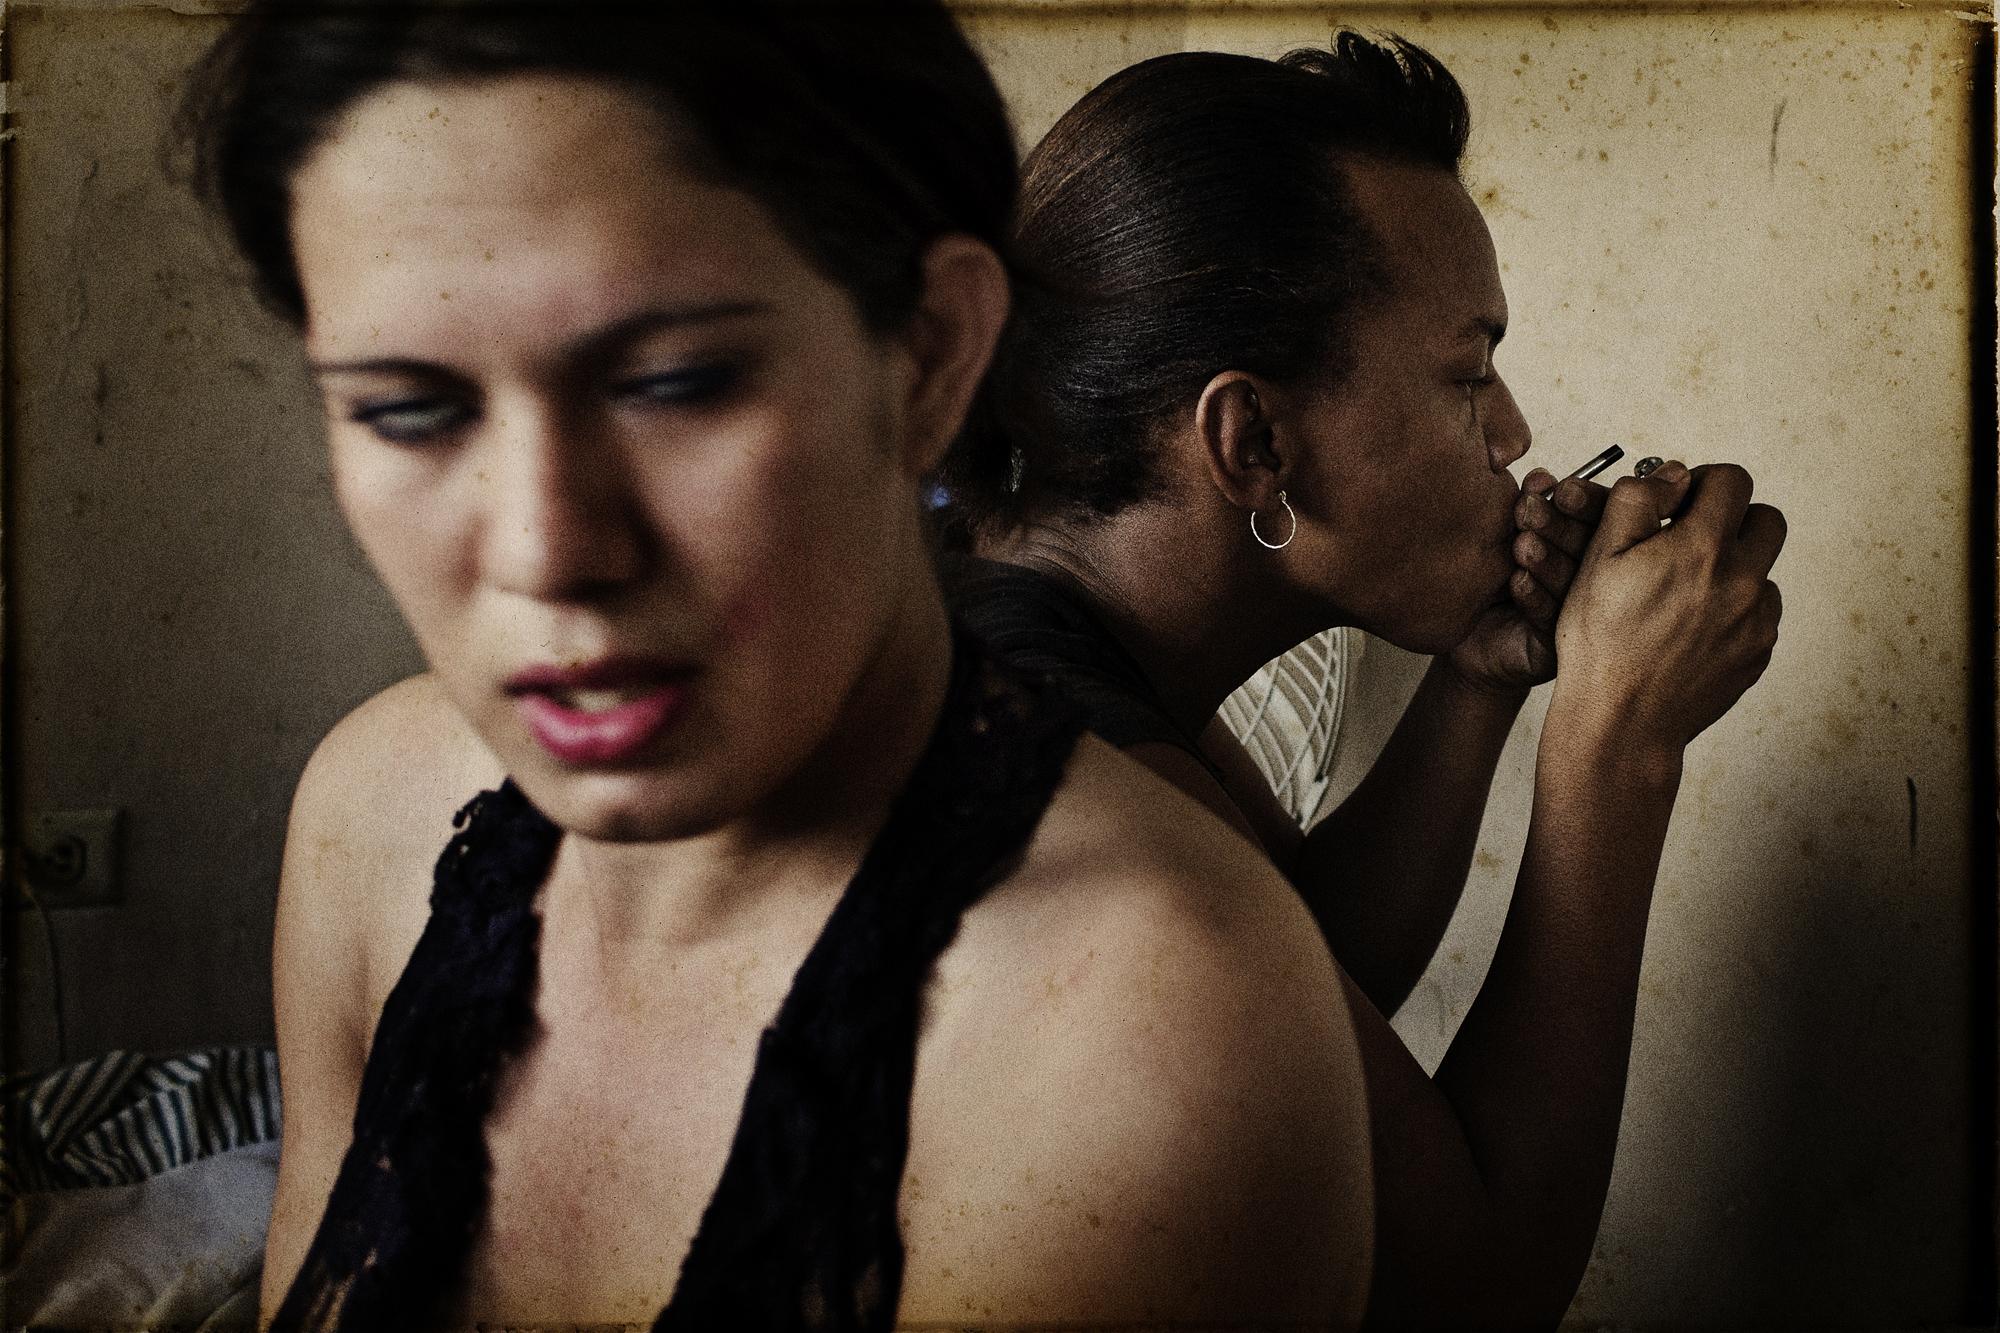 Forced identity - San Pedro Sula, Honduras. May 2008. Deylin and Manuel...